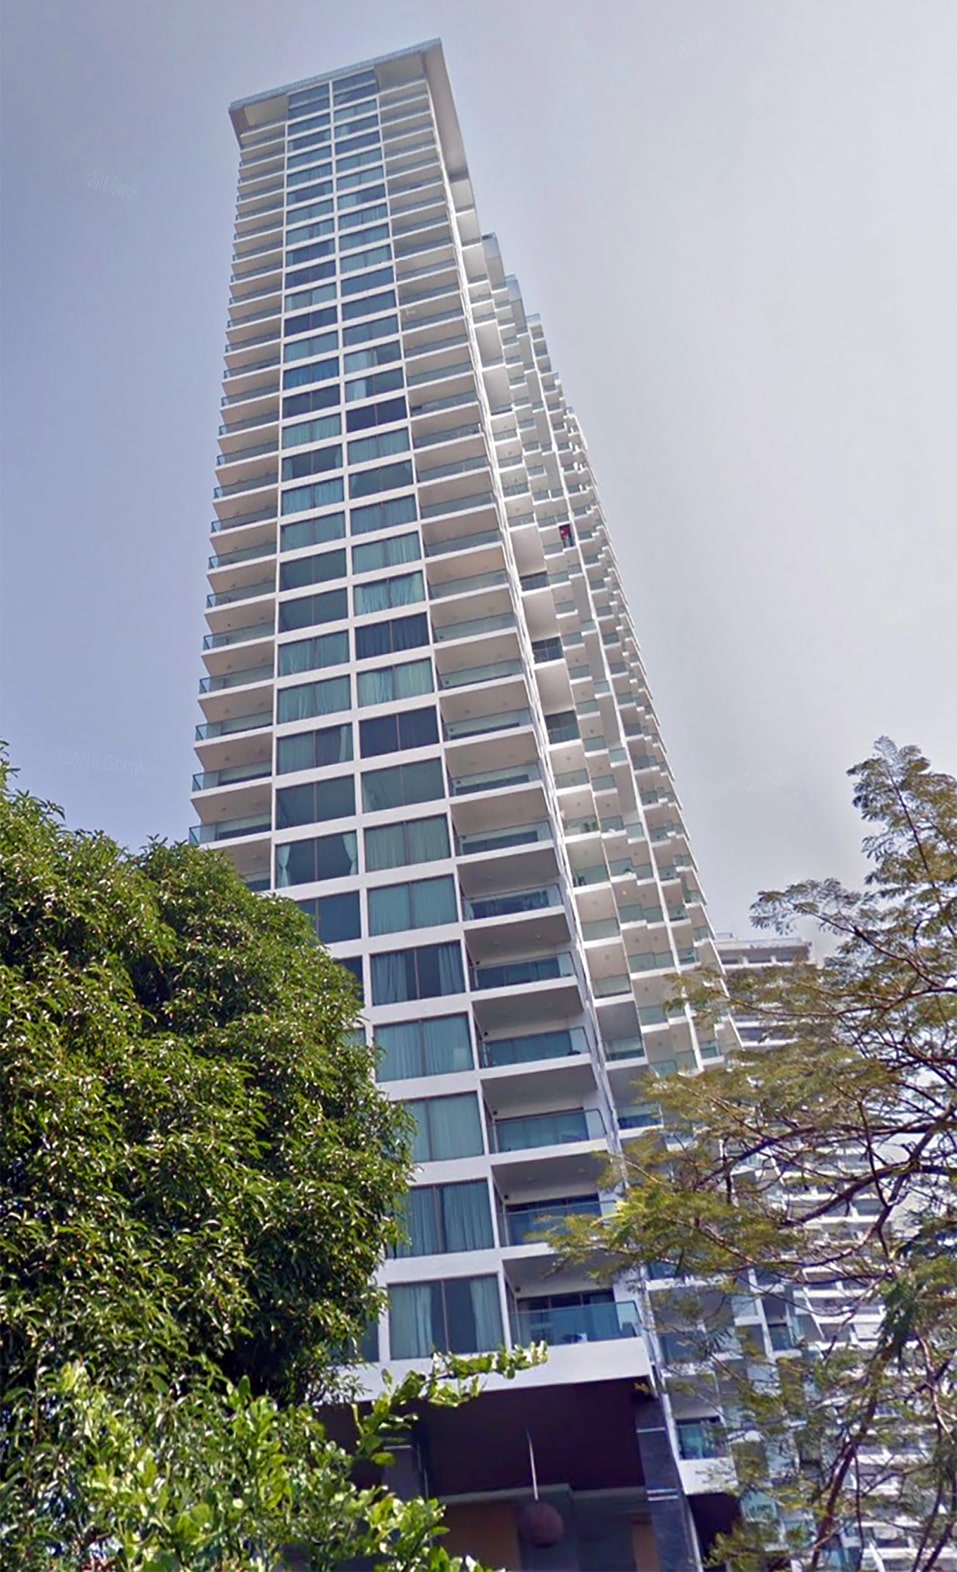 Wong Amat Tower designed by architect Mario Kleff